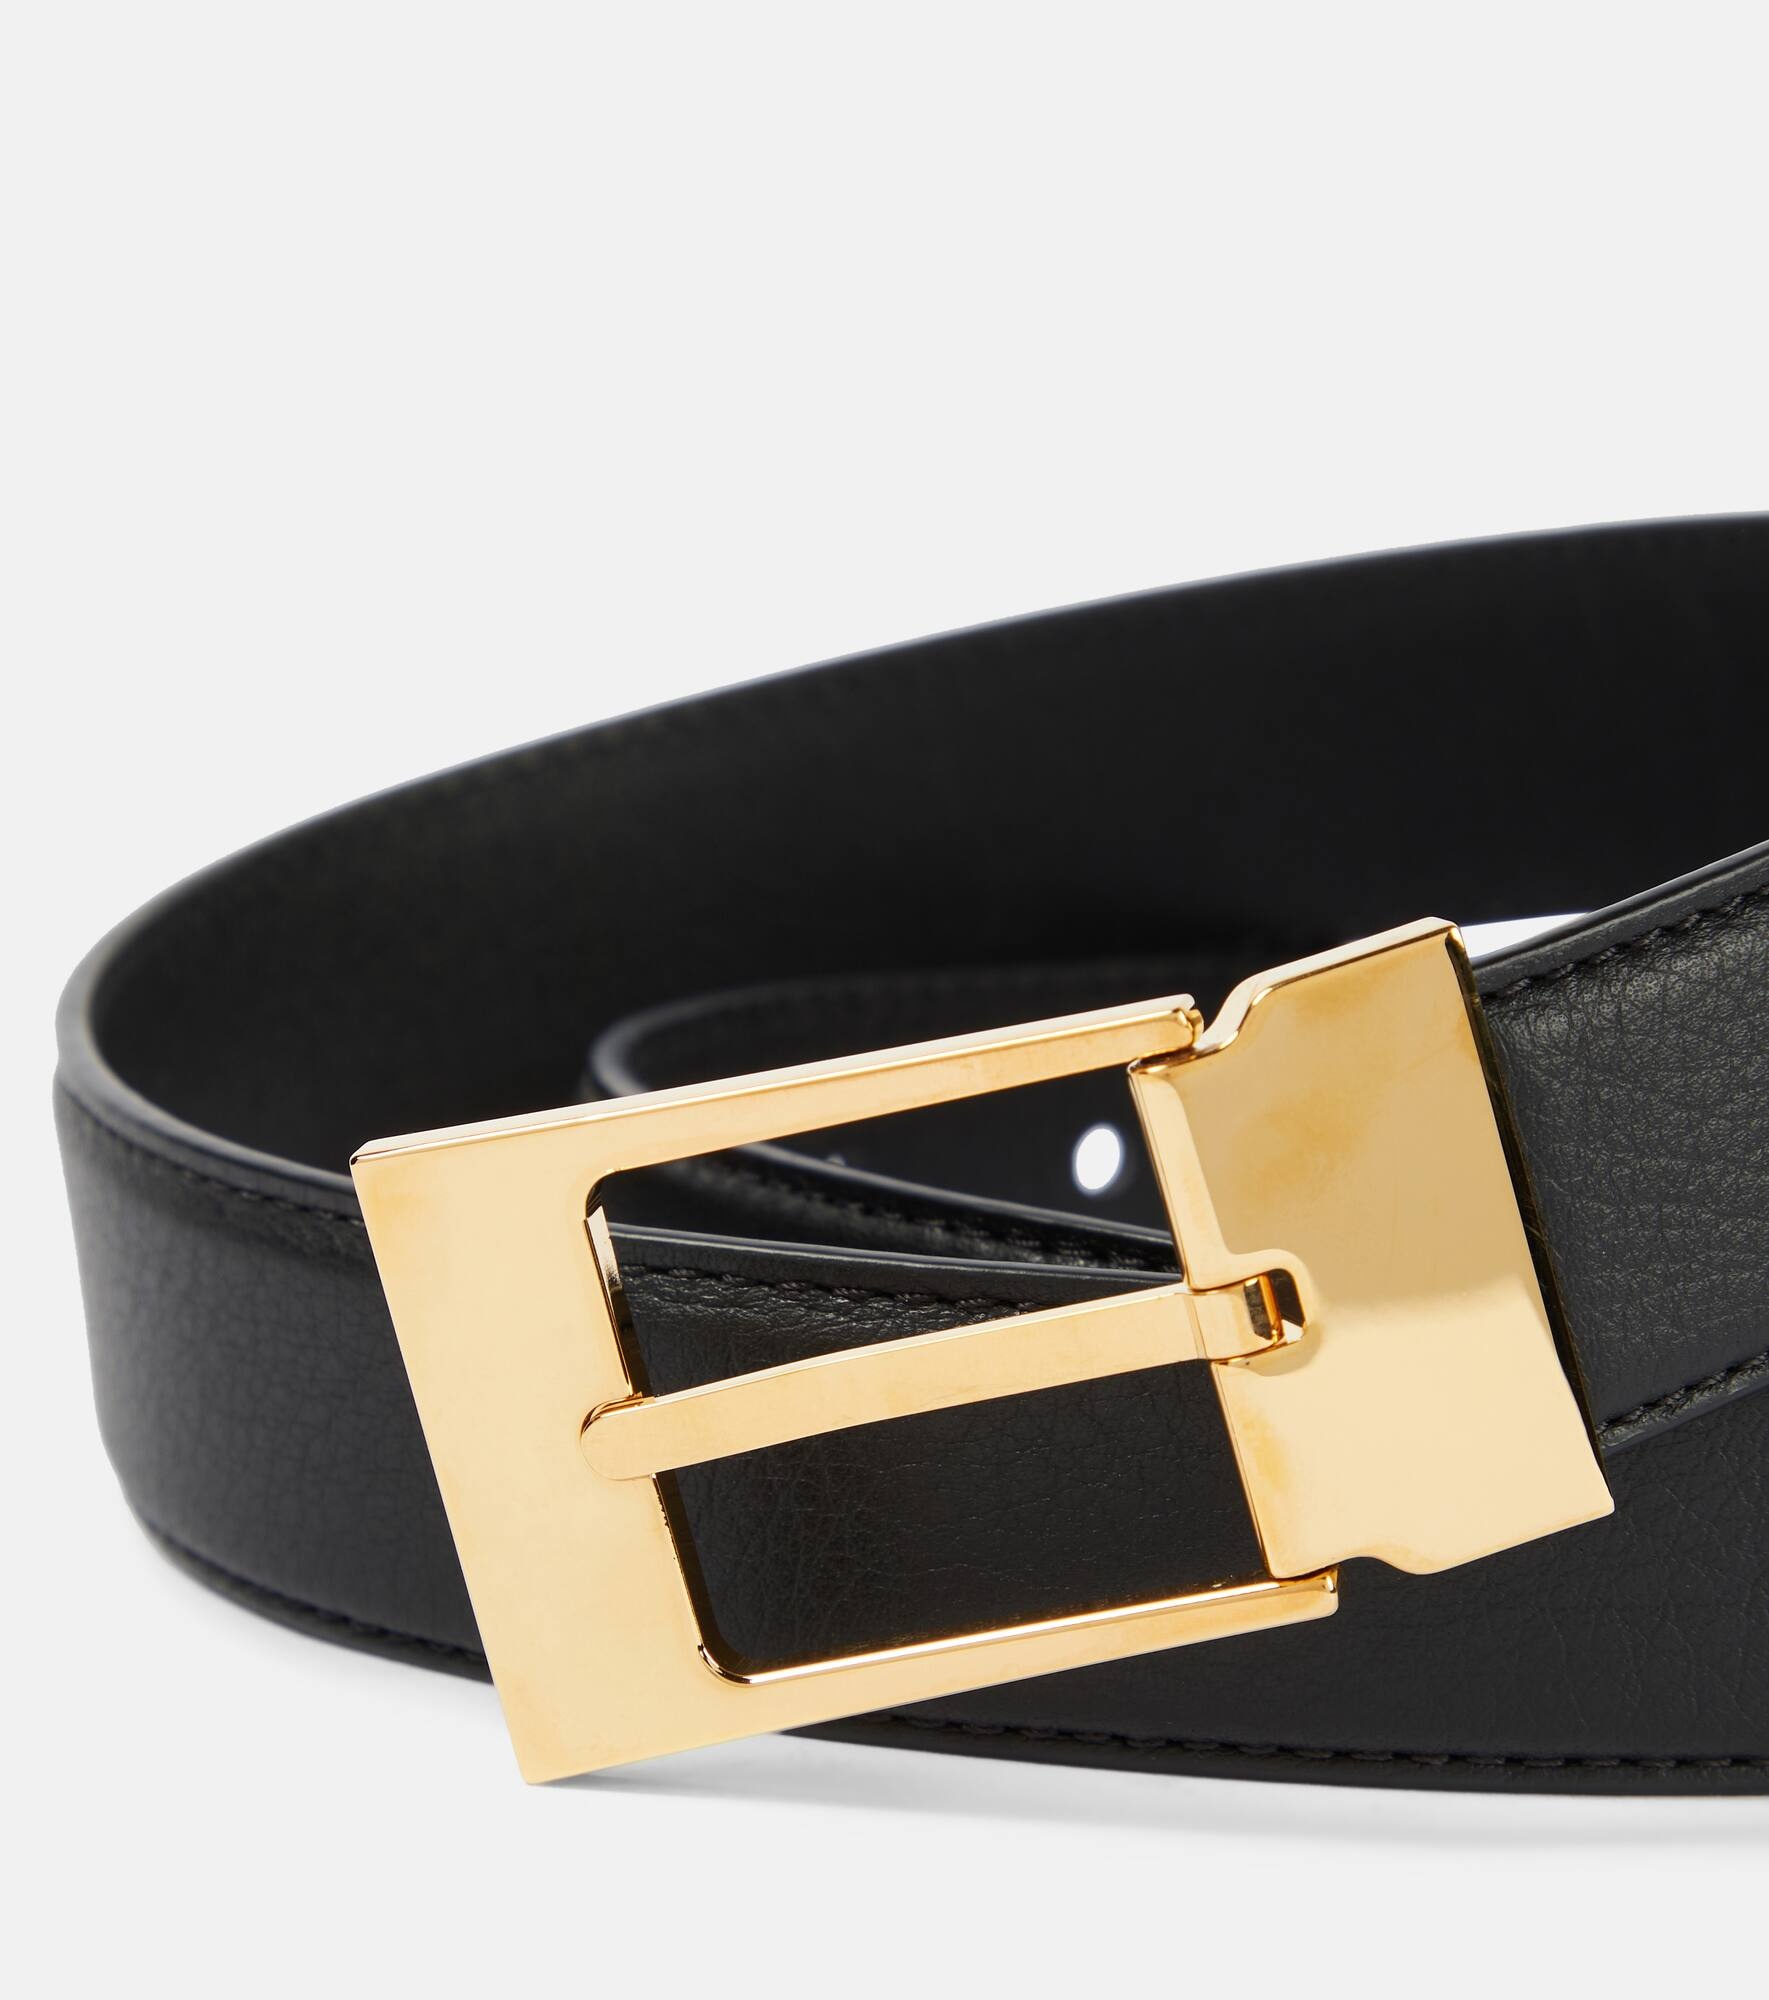 Leather belt - 3